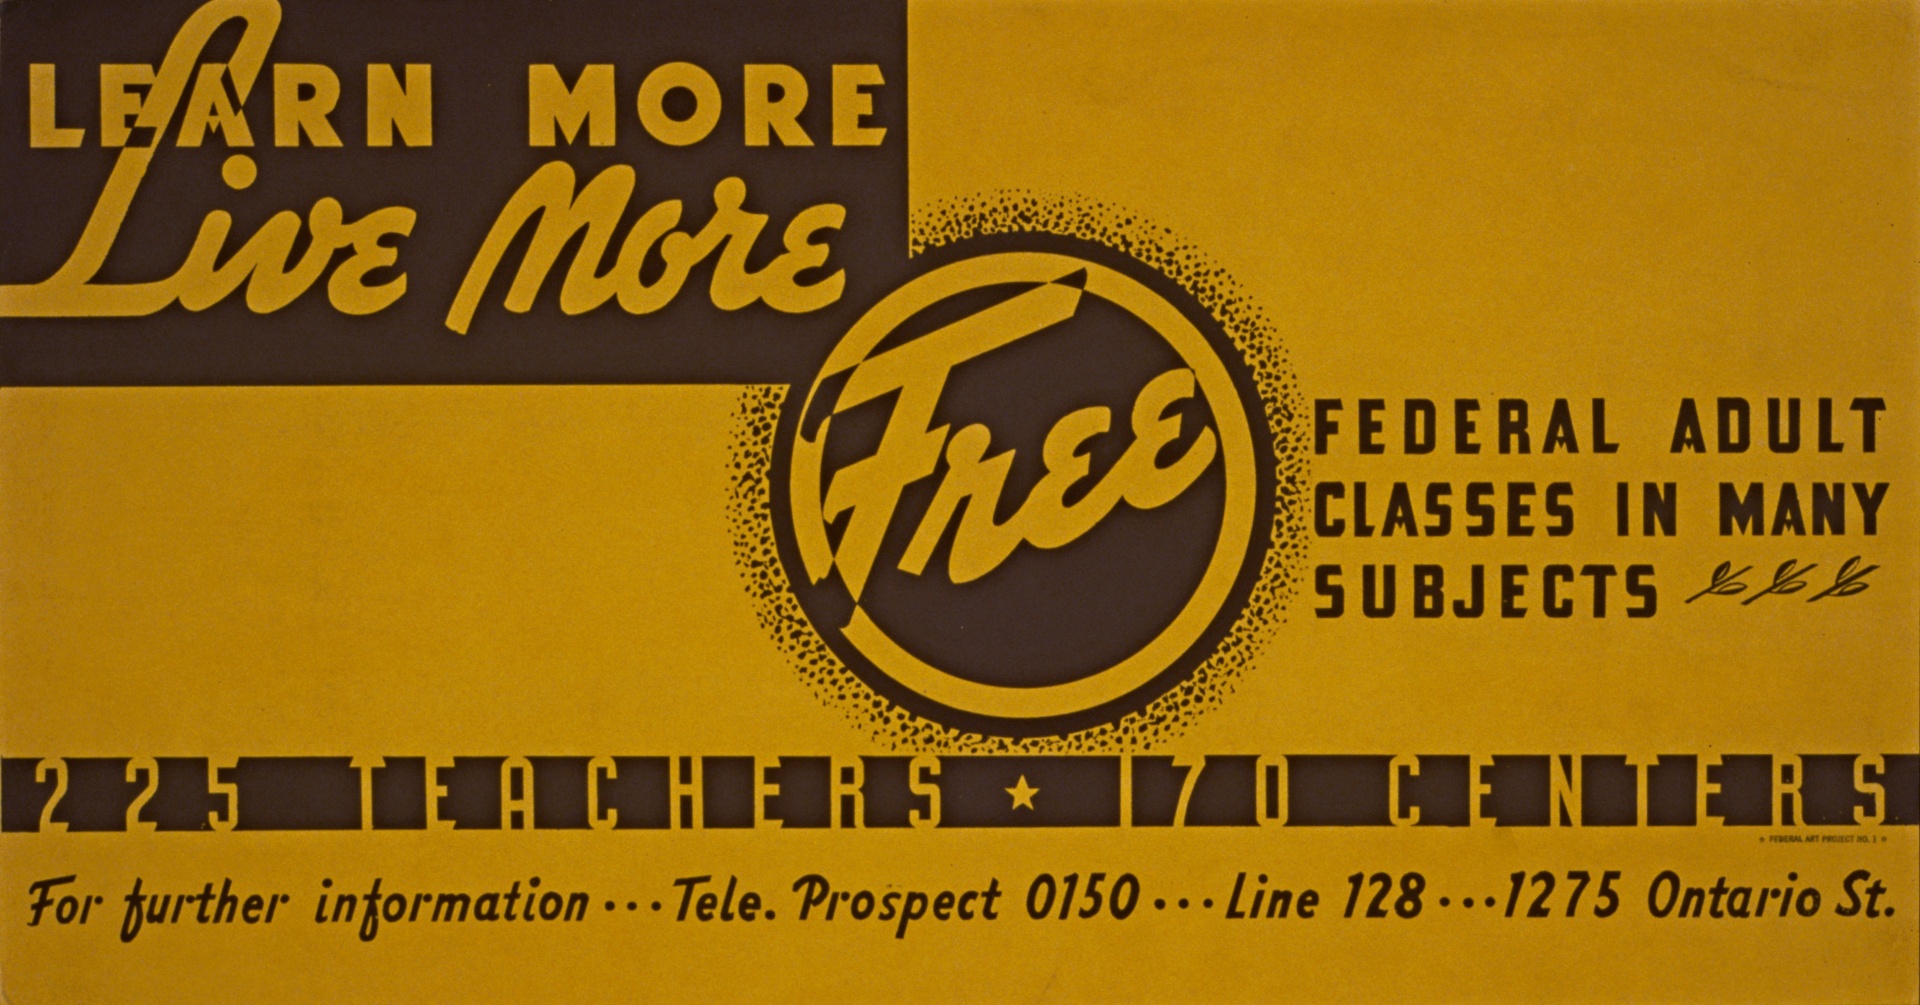 Poster Adult Education Vintage